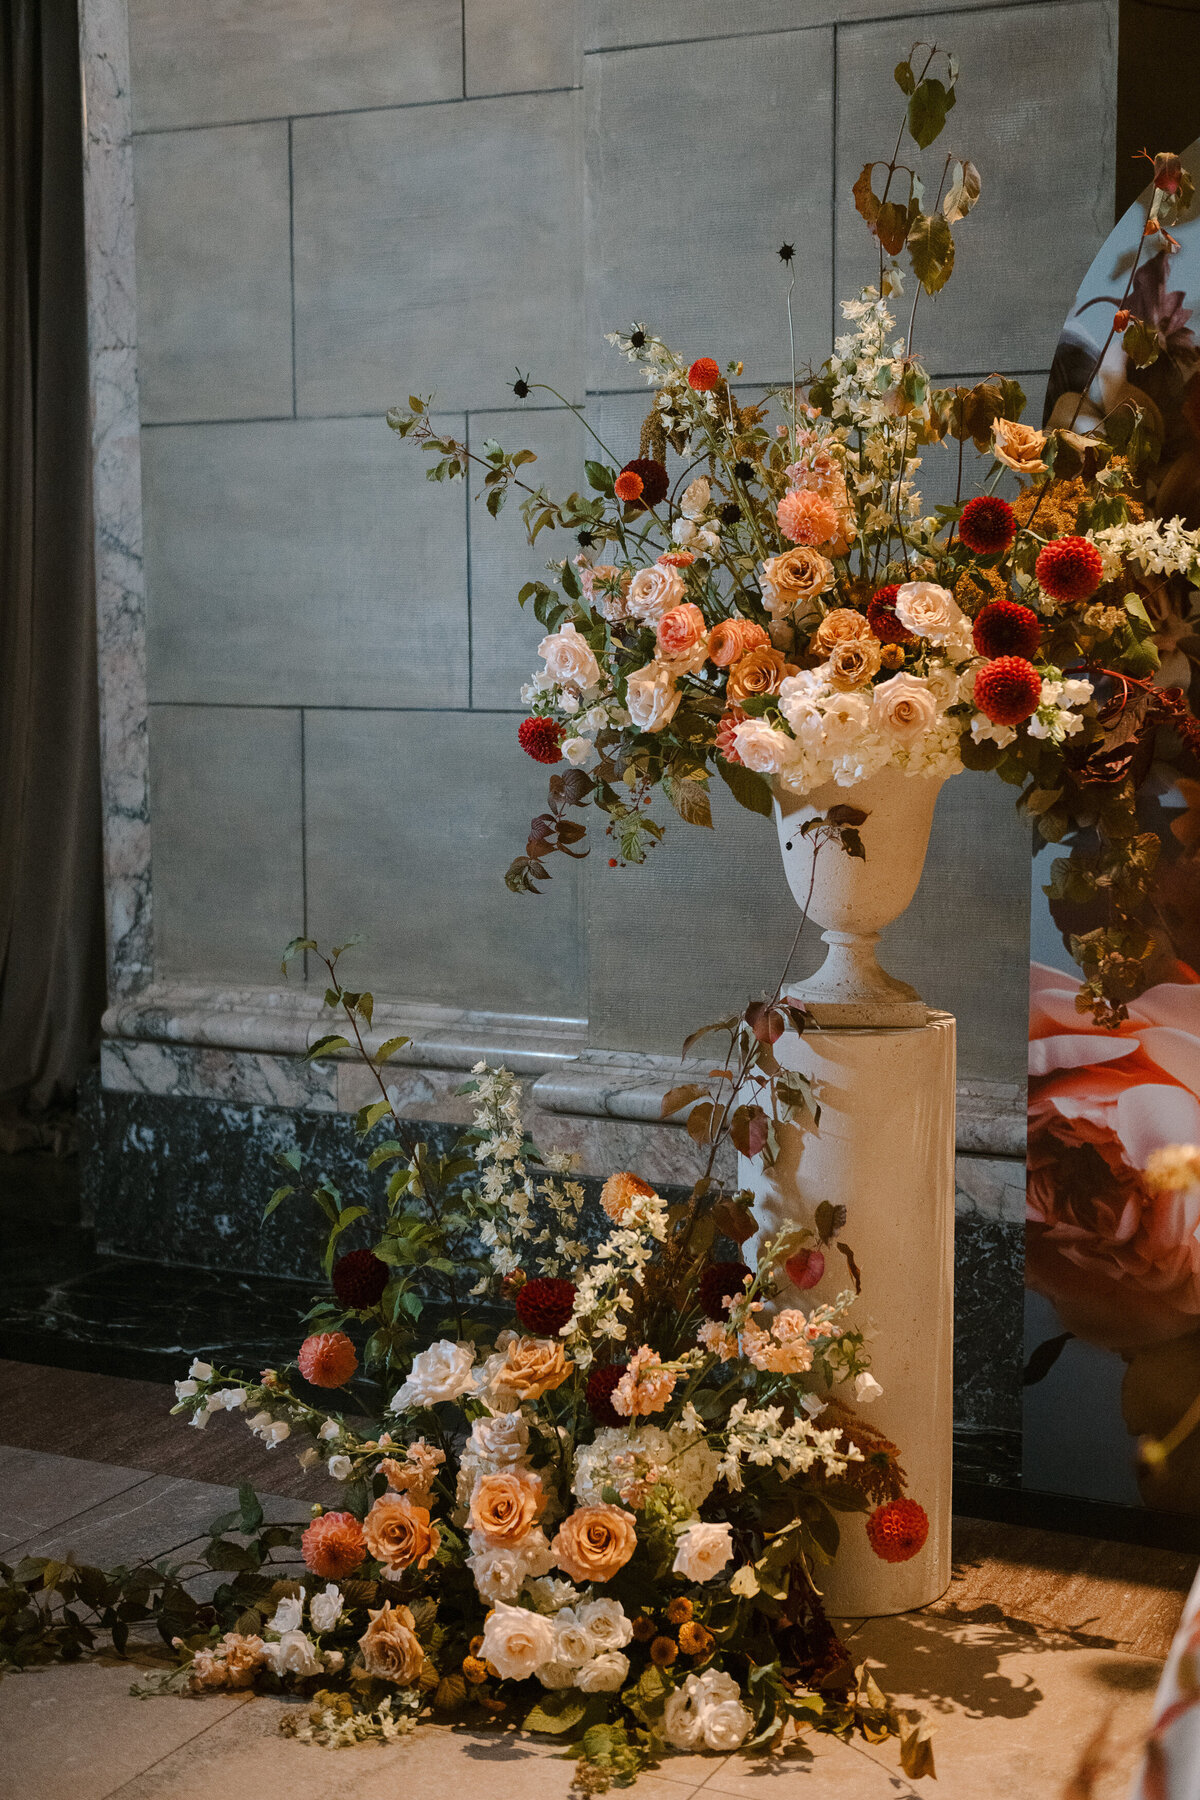 Atelier-Carmel-Wedding-Florist-GALLERY-Arrangements-18